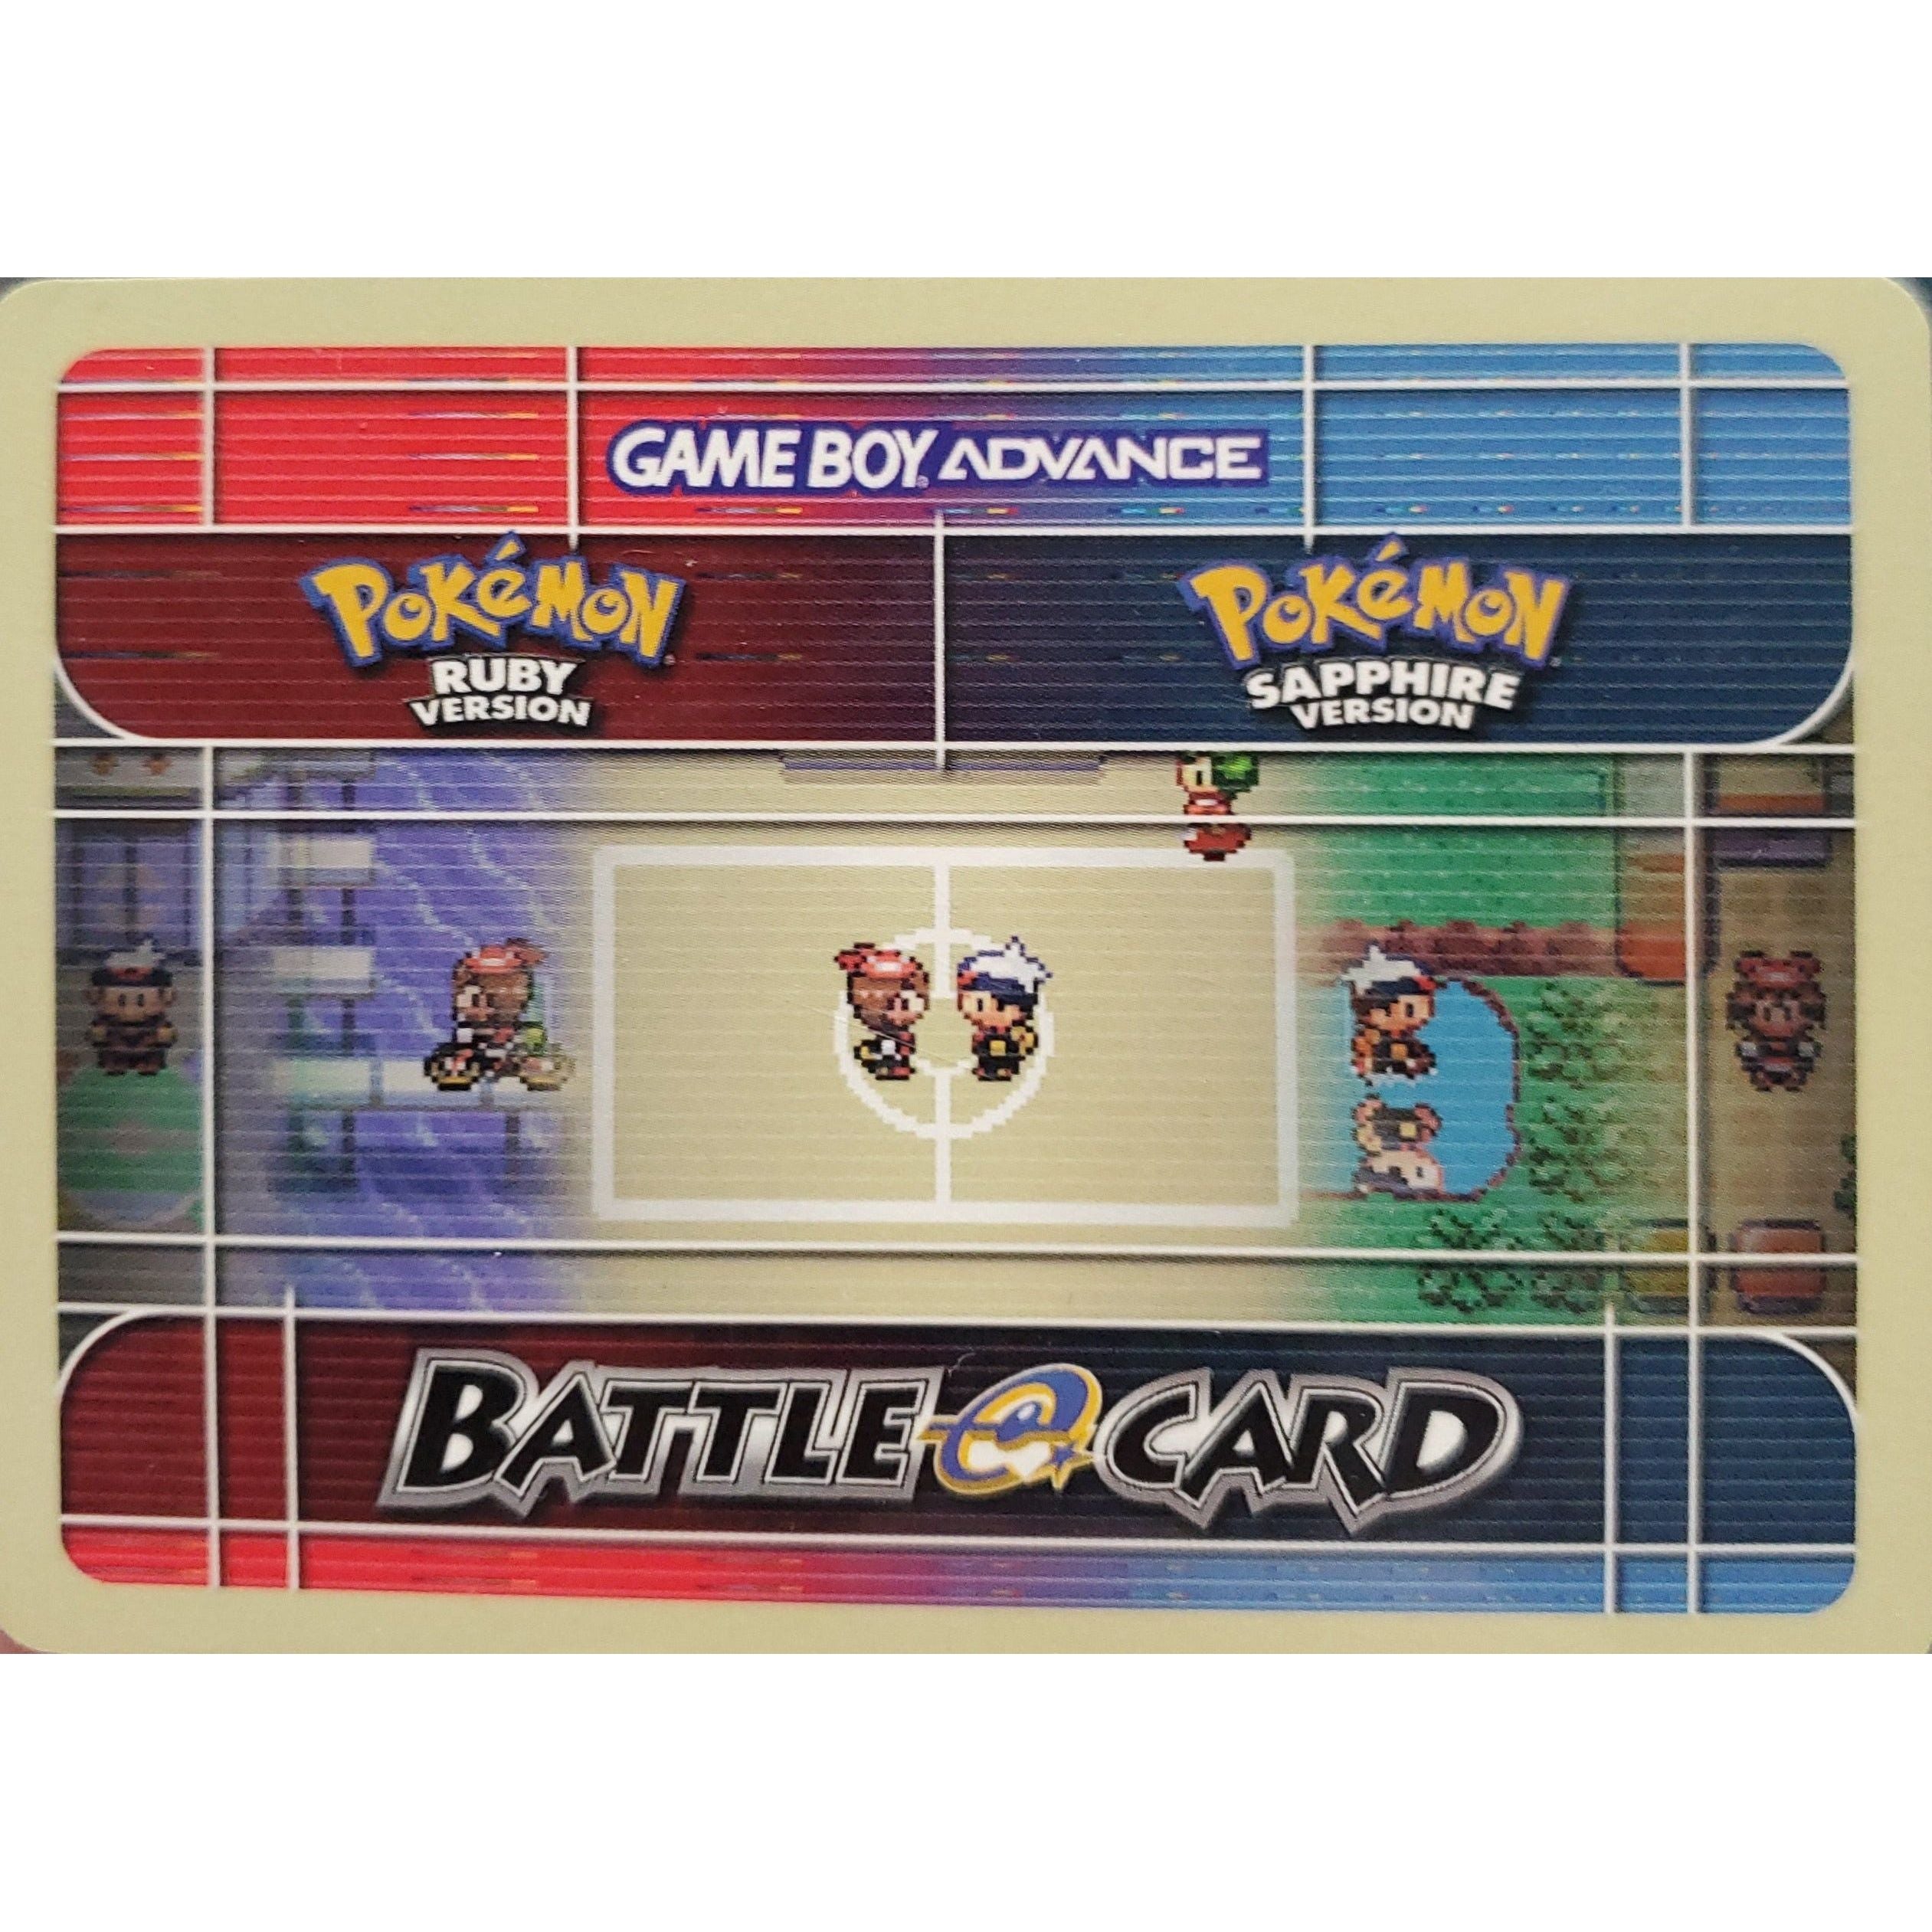 GBA - Pokemon Battle Card - Tuber Sonya